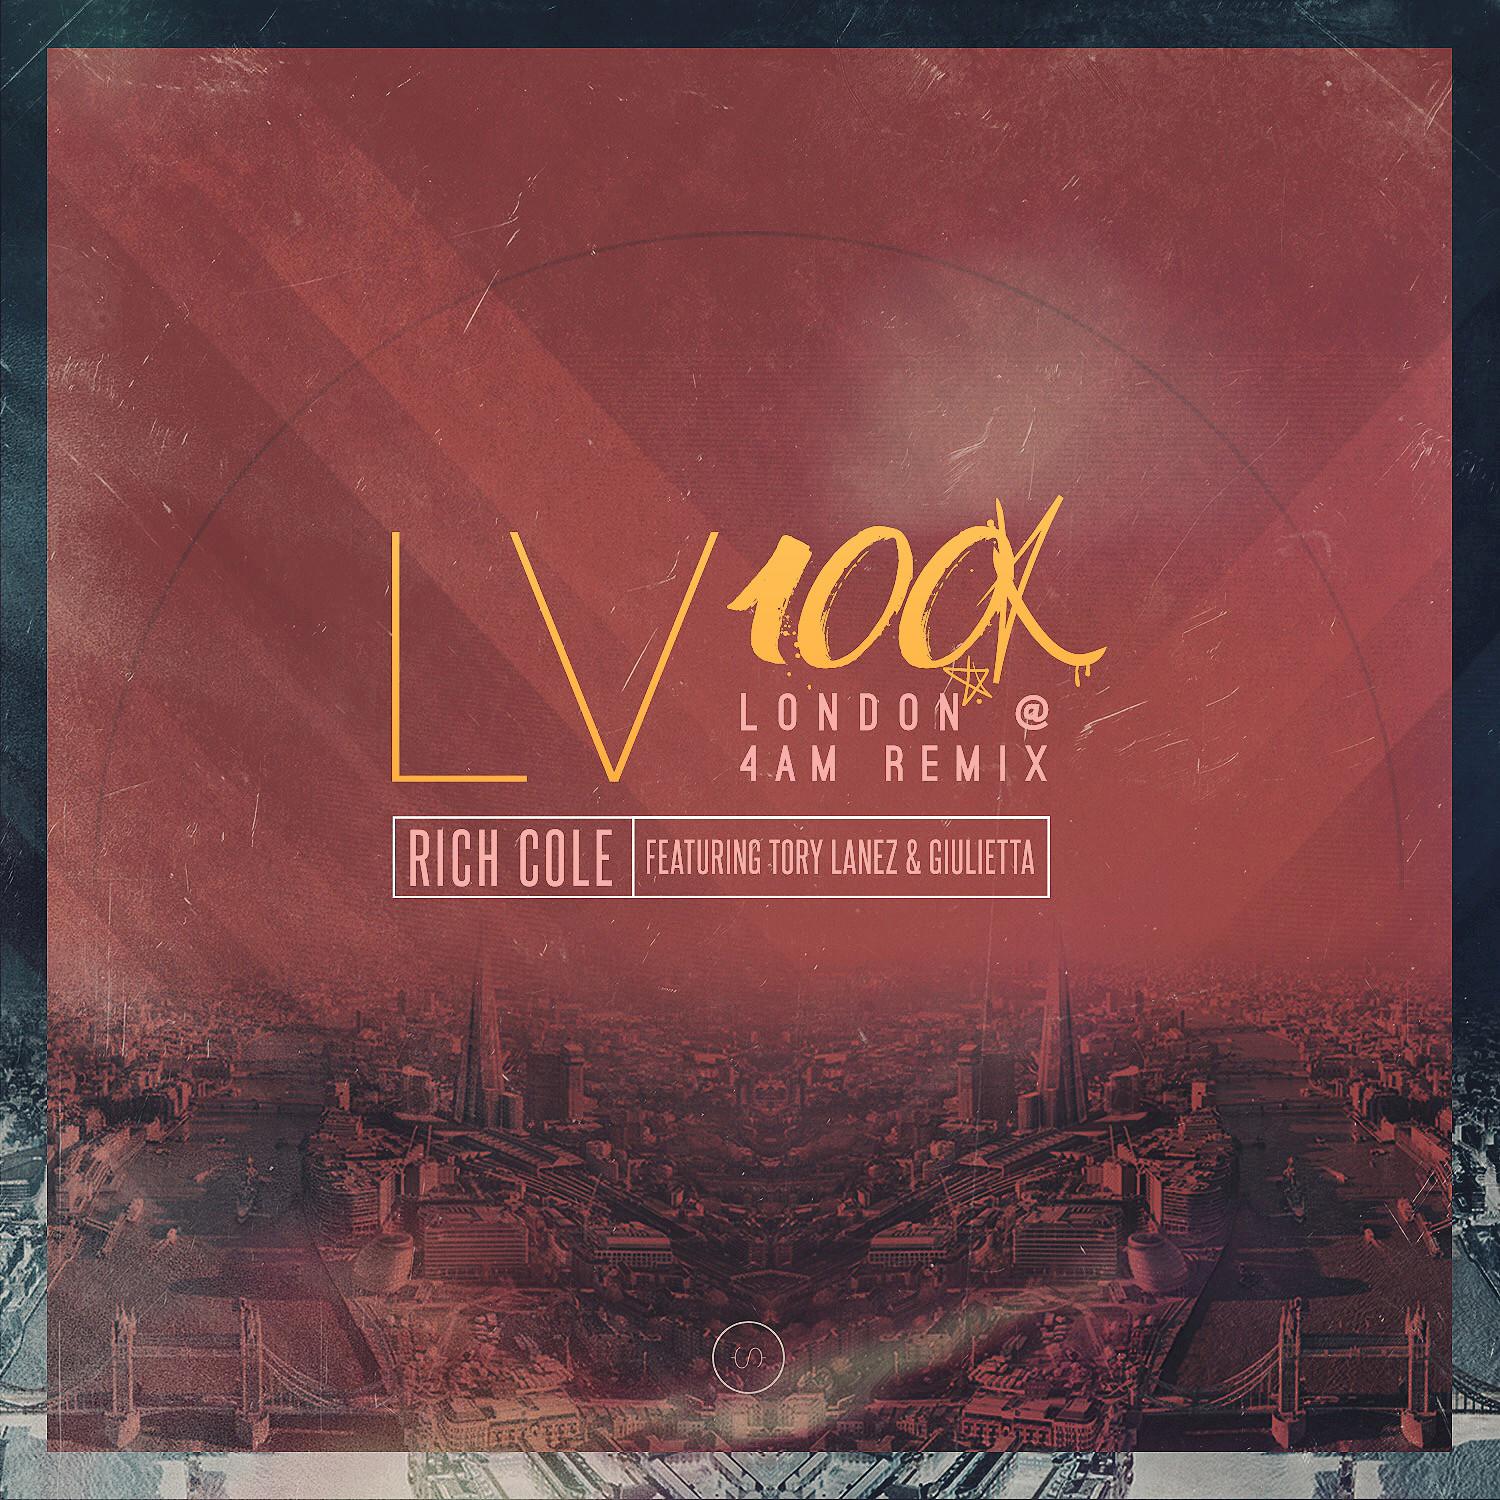 LV100K (London At 4am Remix) [feat. Tory Lanez, Giulietta]